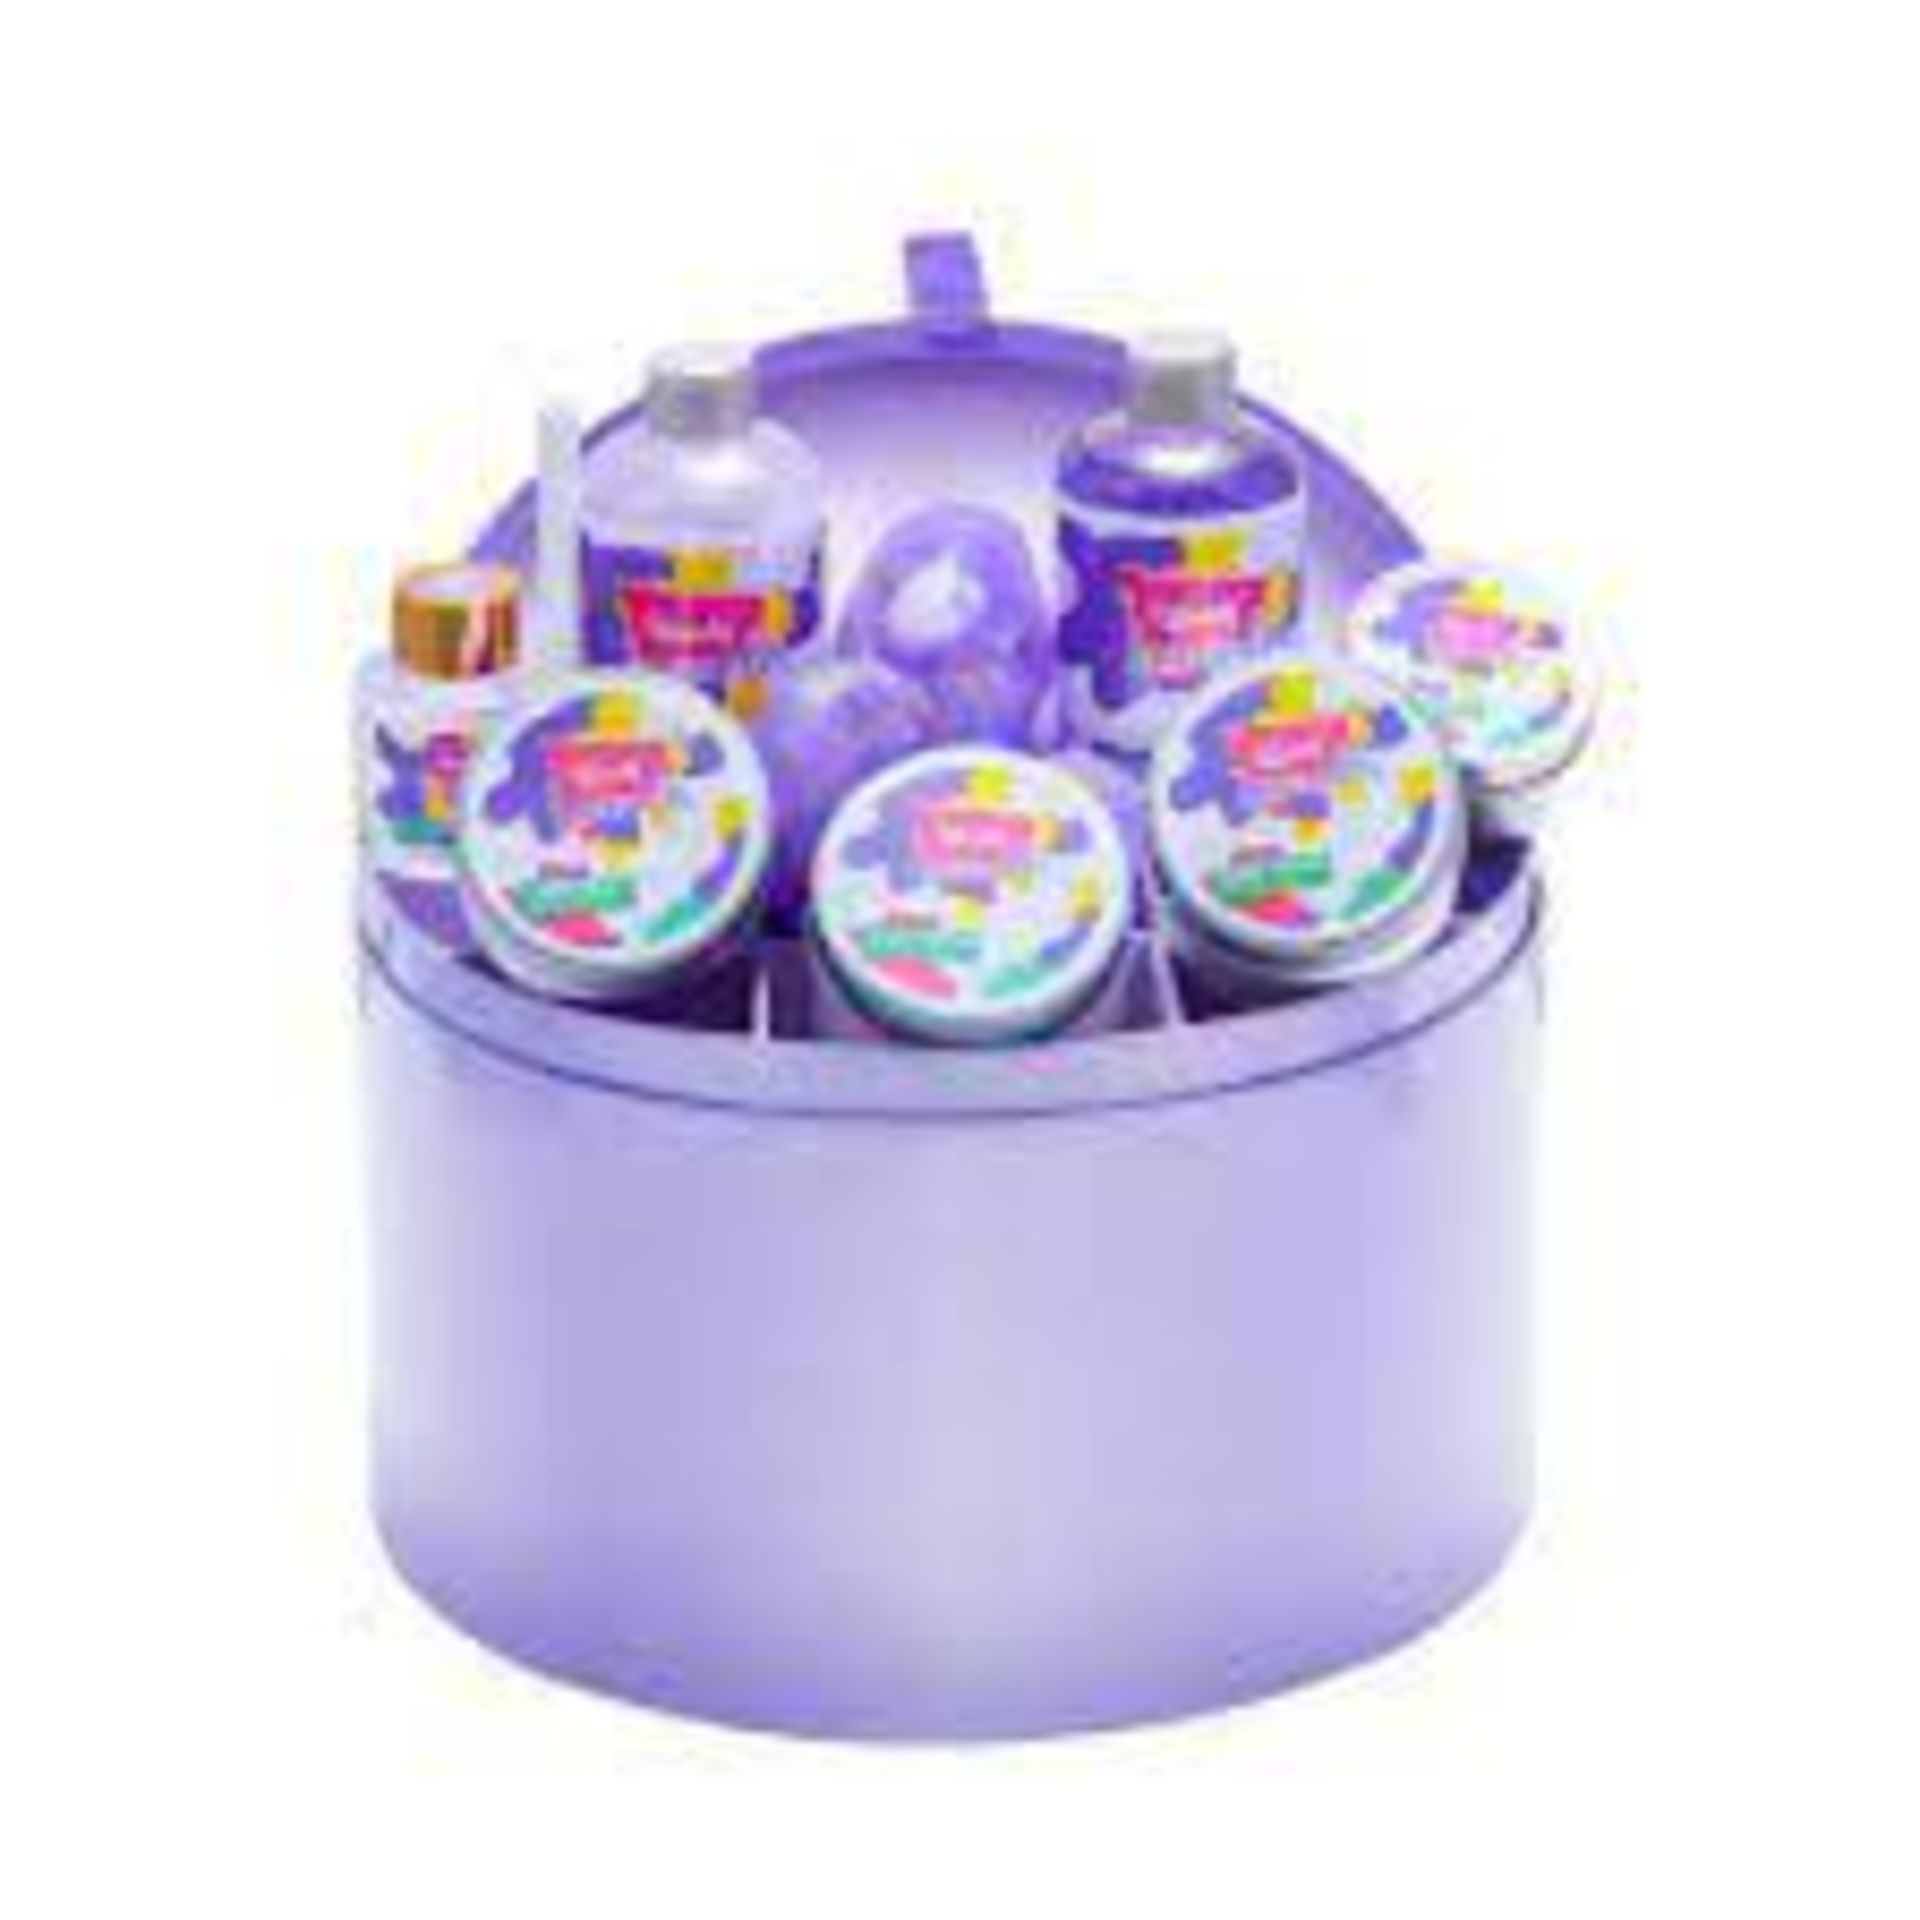 2 X Lavender Bath Shower Jewelry Box. (SKU: BFF-BP20-001-1). 10pcs Spa Set Meet Your Needs: Luxury